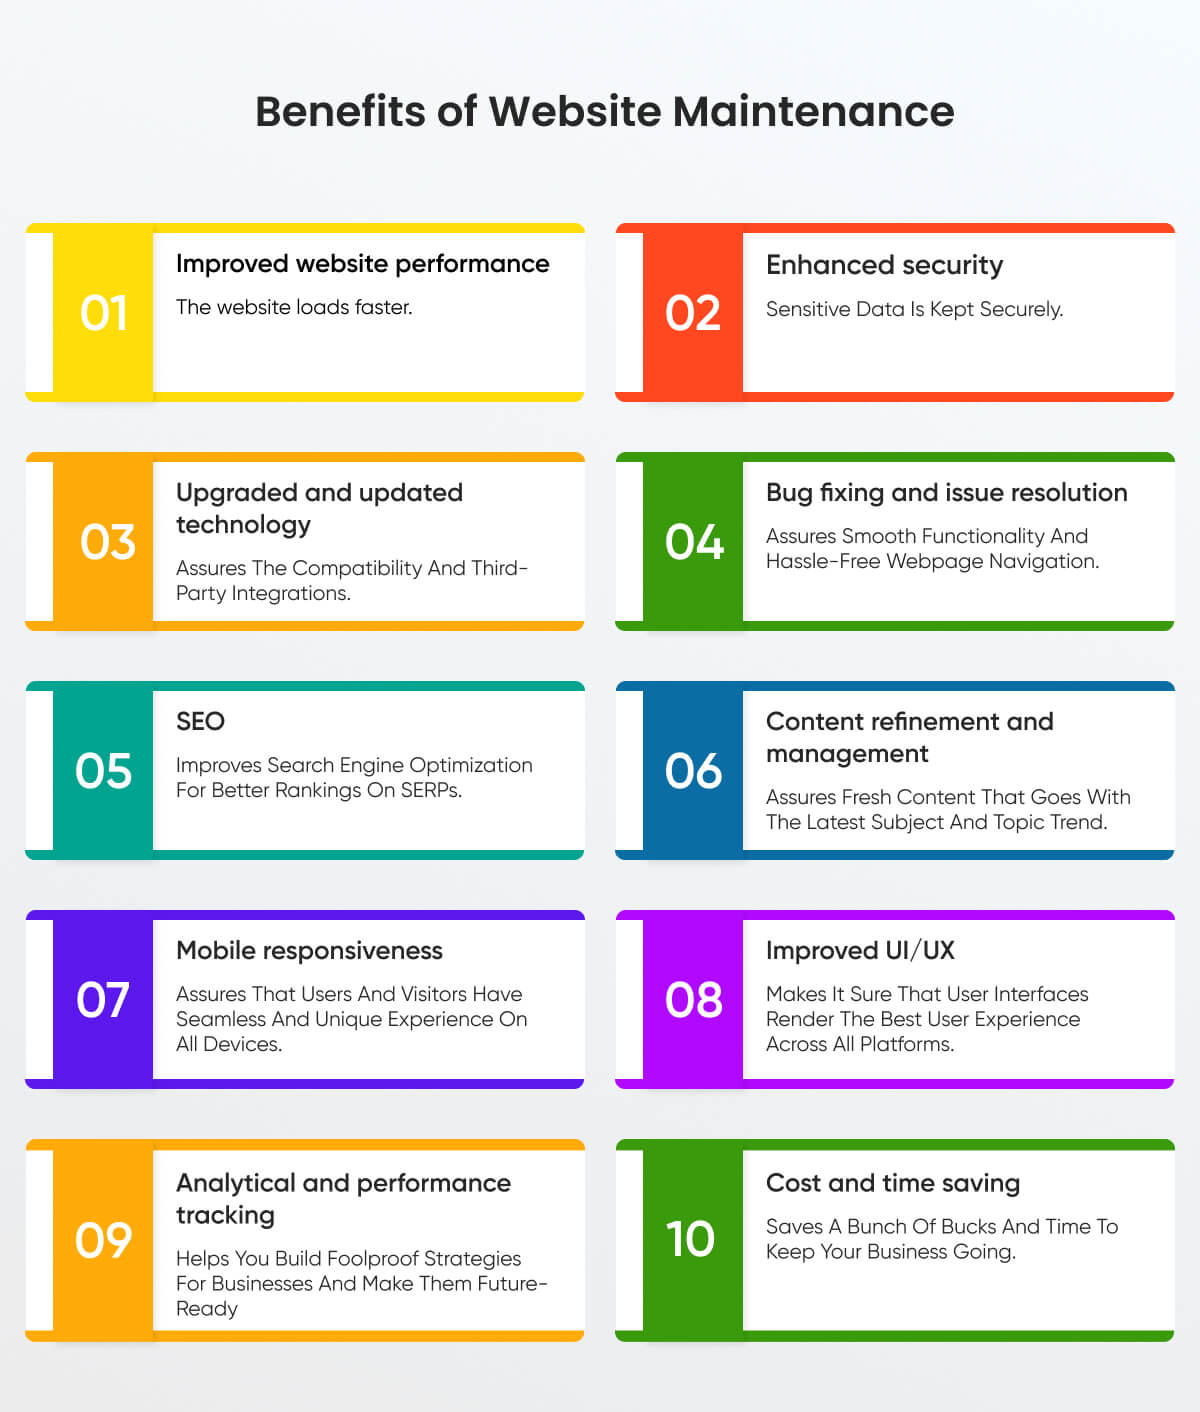 Benefits of website maintenance